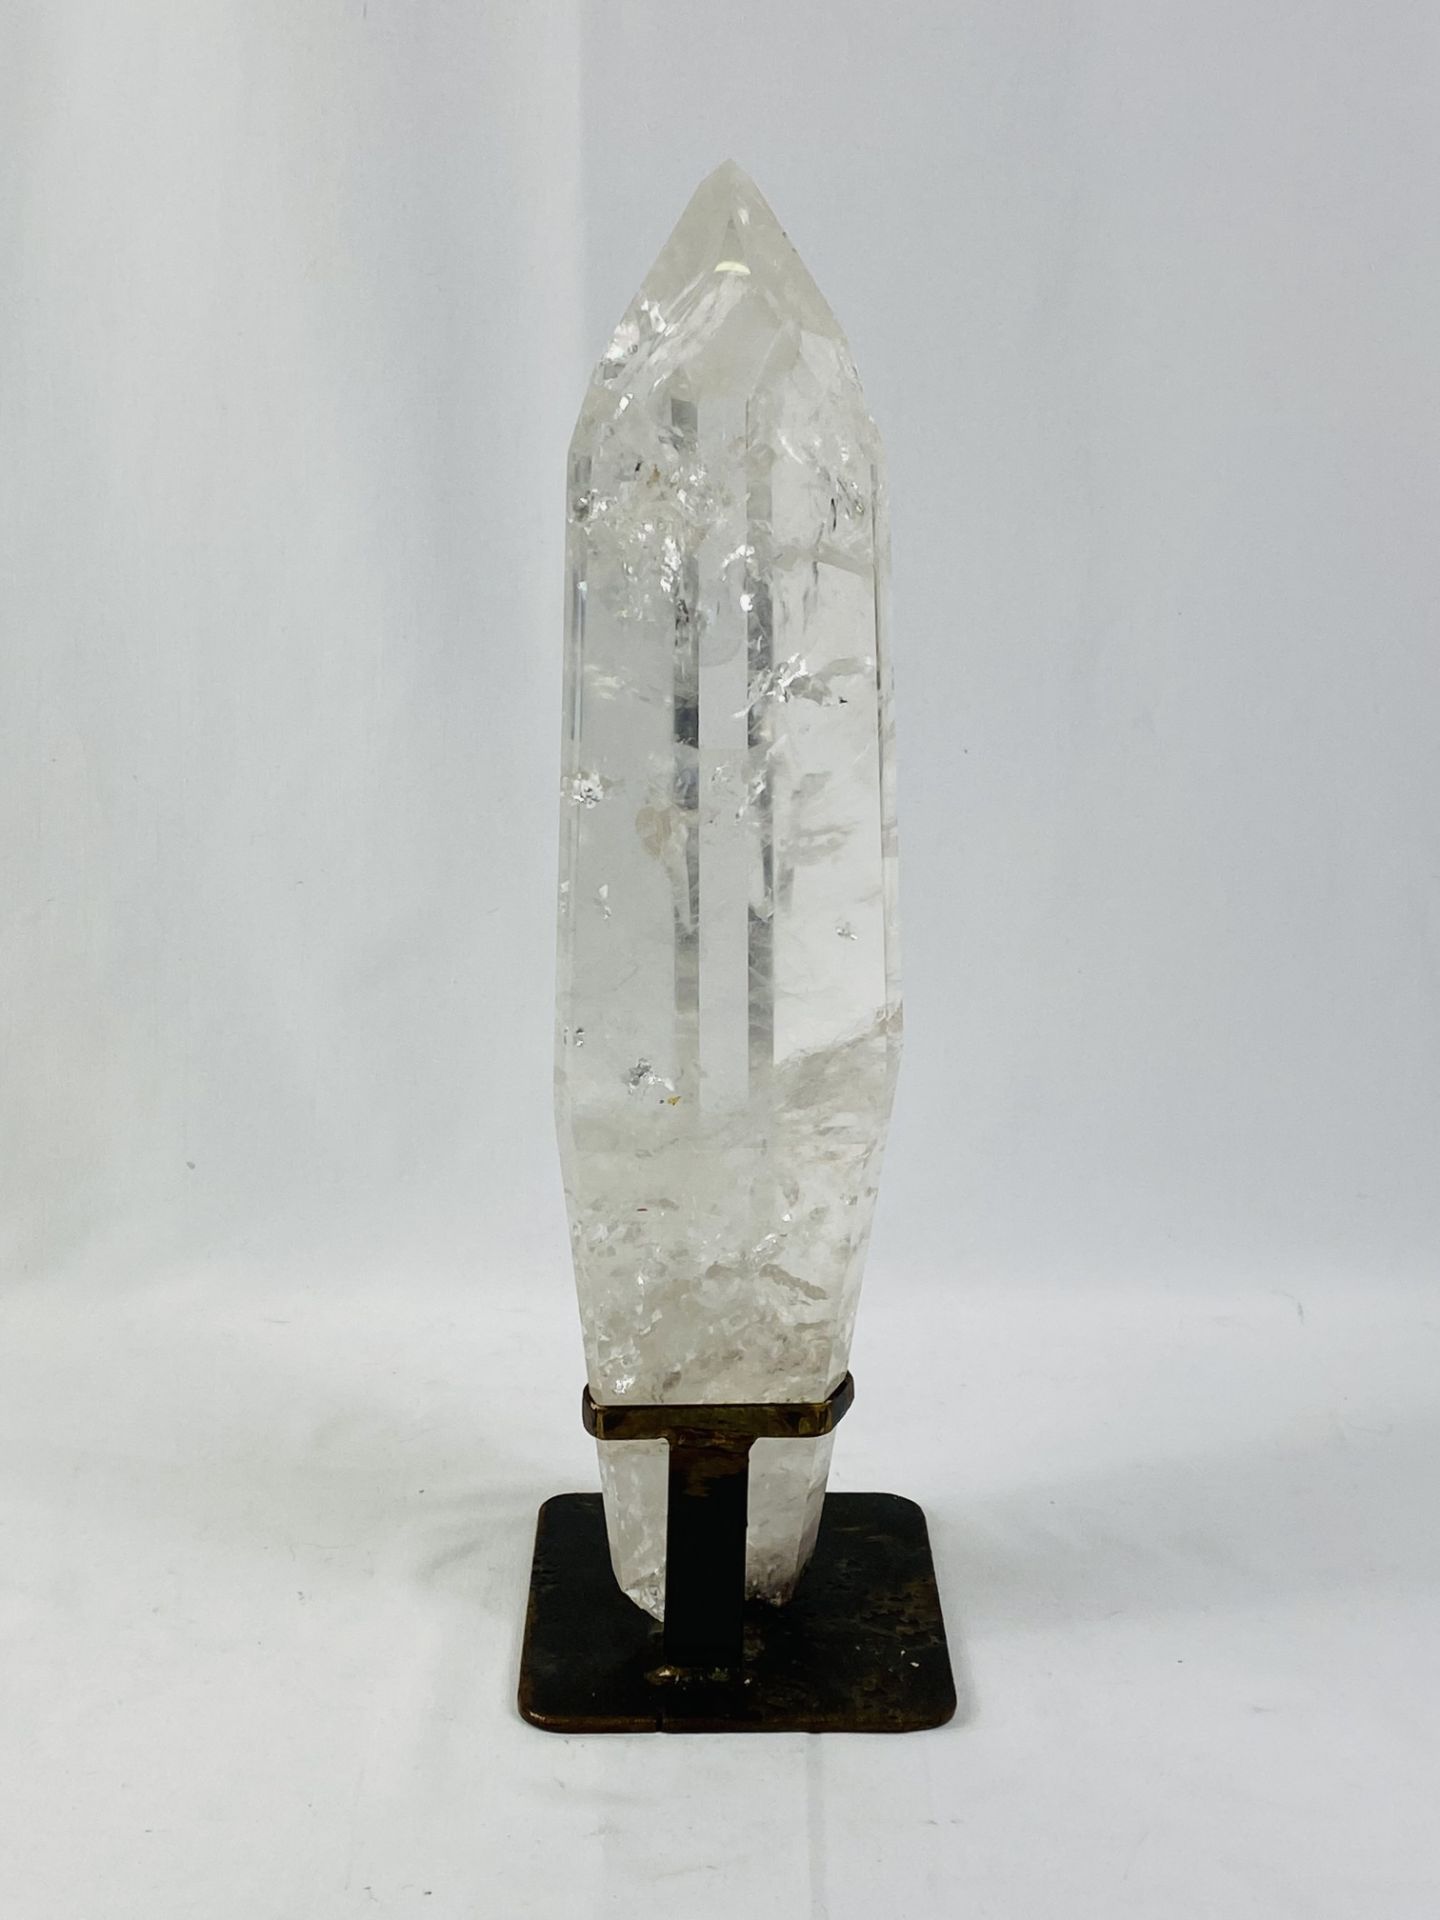 Polished rock crystal mounted in metal base - Image 3 of 6